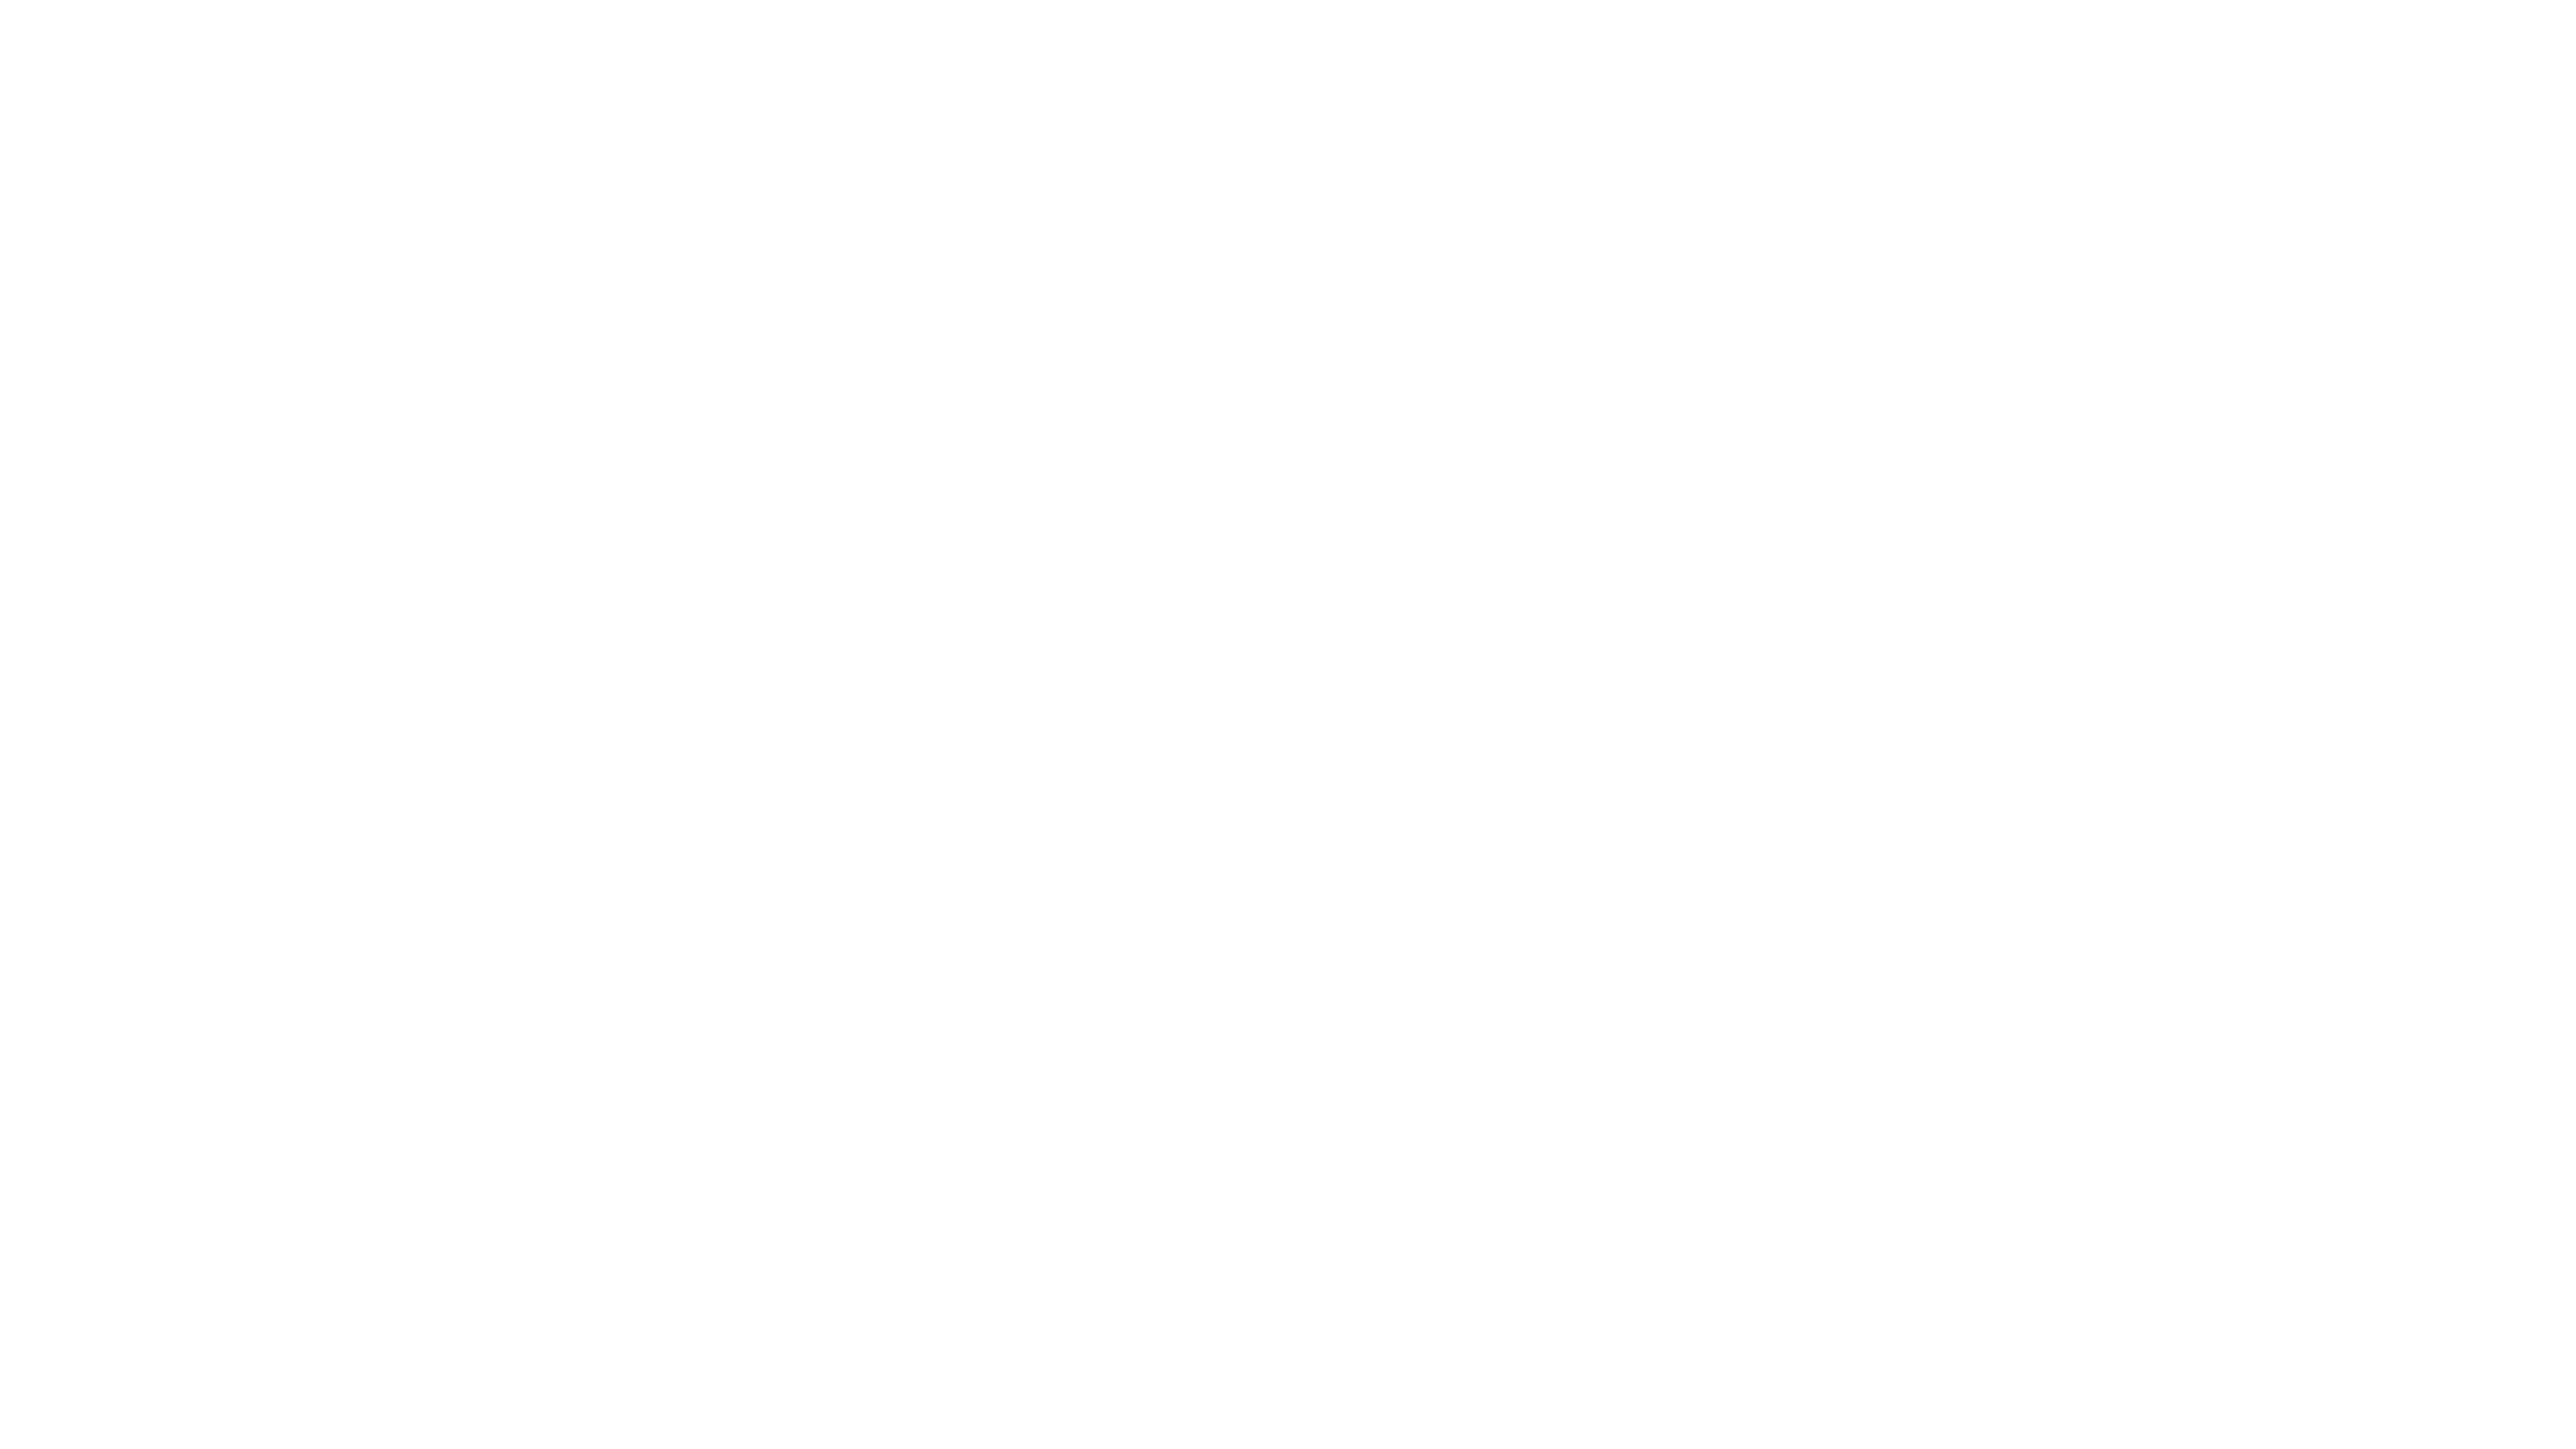 LOGO - Microsoft